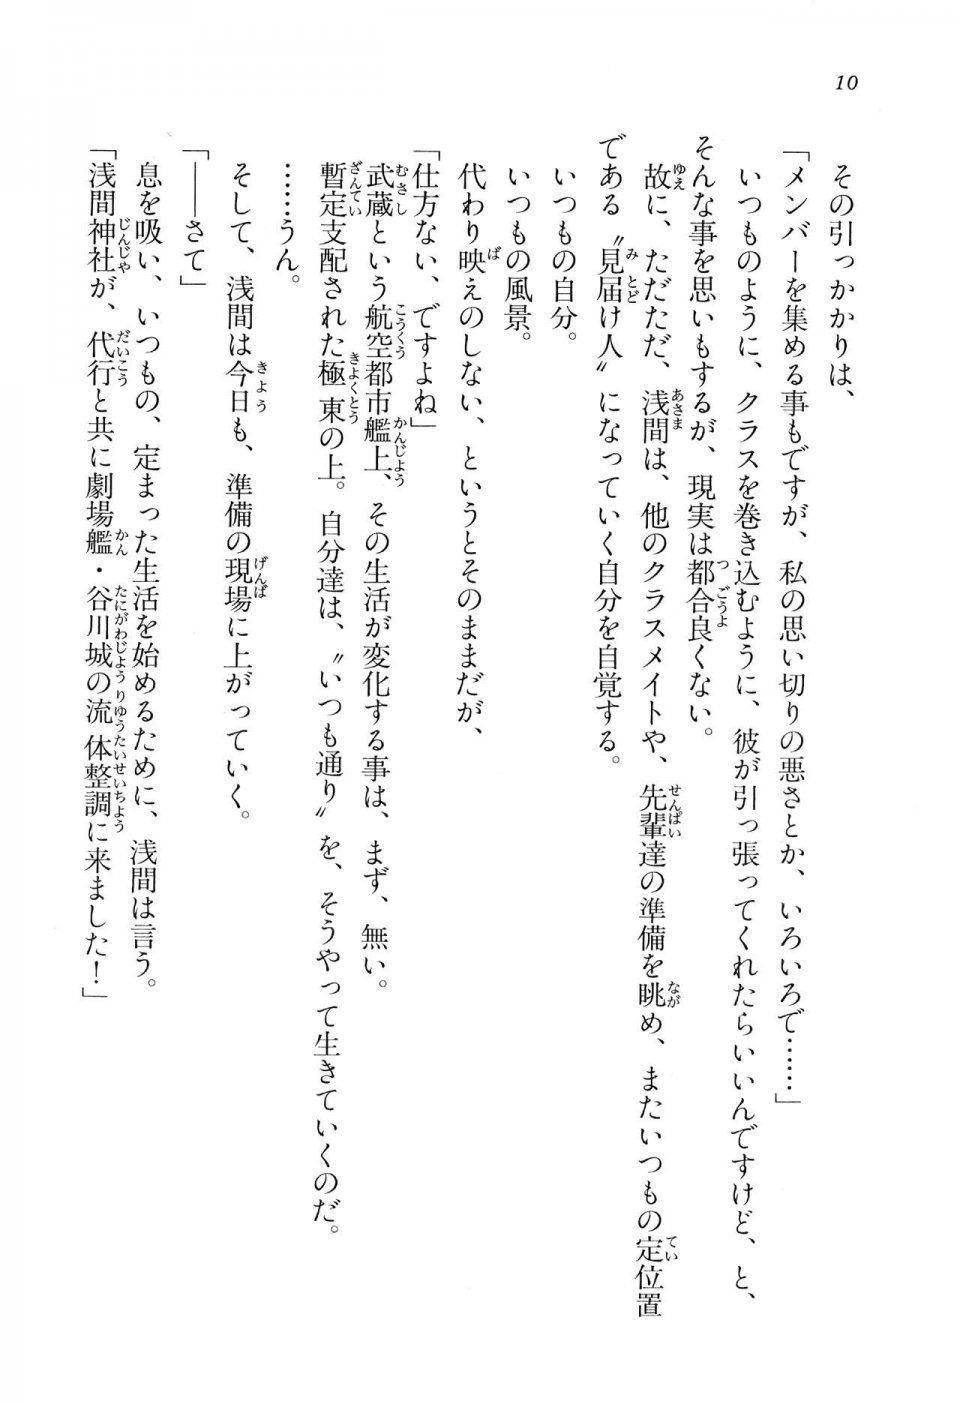 Kyoukai Senjou no Horizon BD Special Mininovel Vol 1(1A) - Photo #14